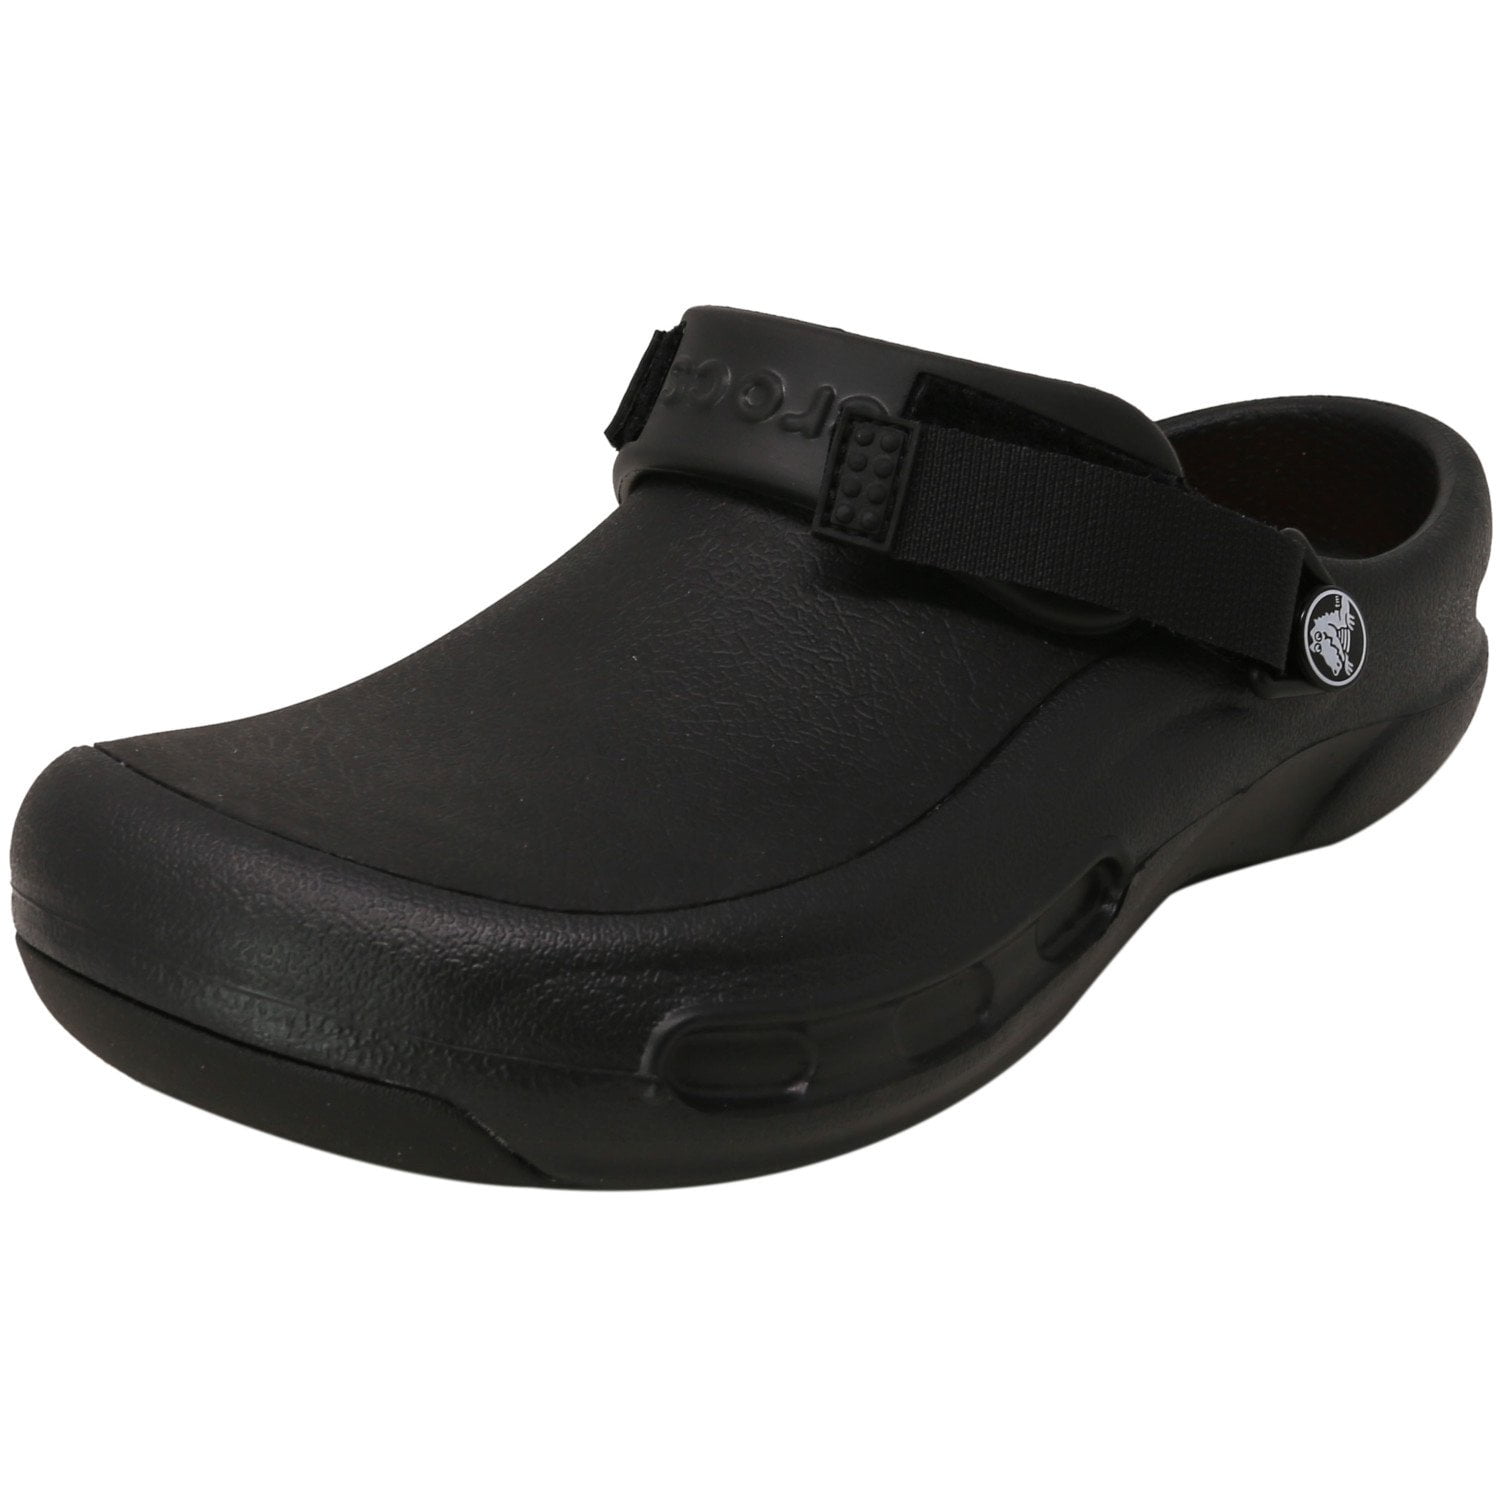 Crocs Bistro Pro Black Ankle-High Clogs 